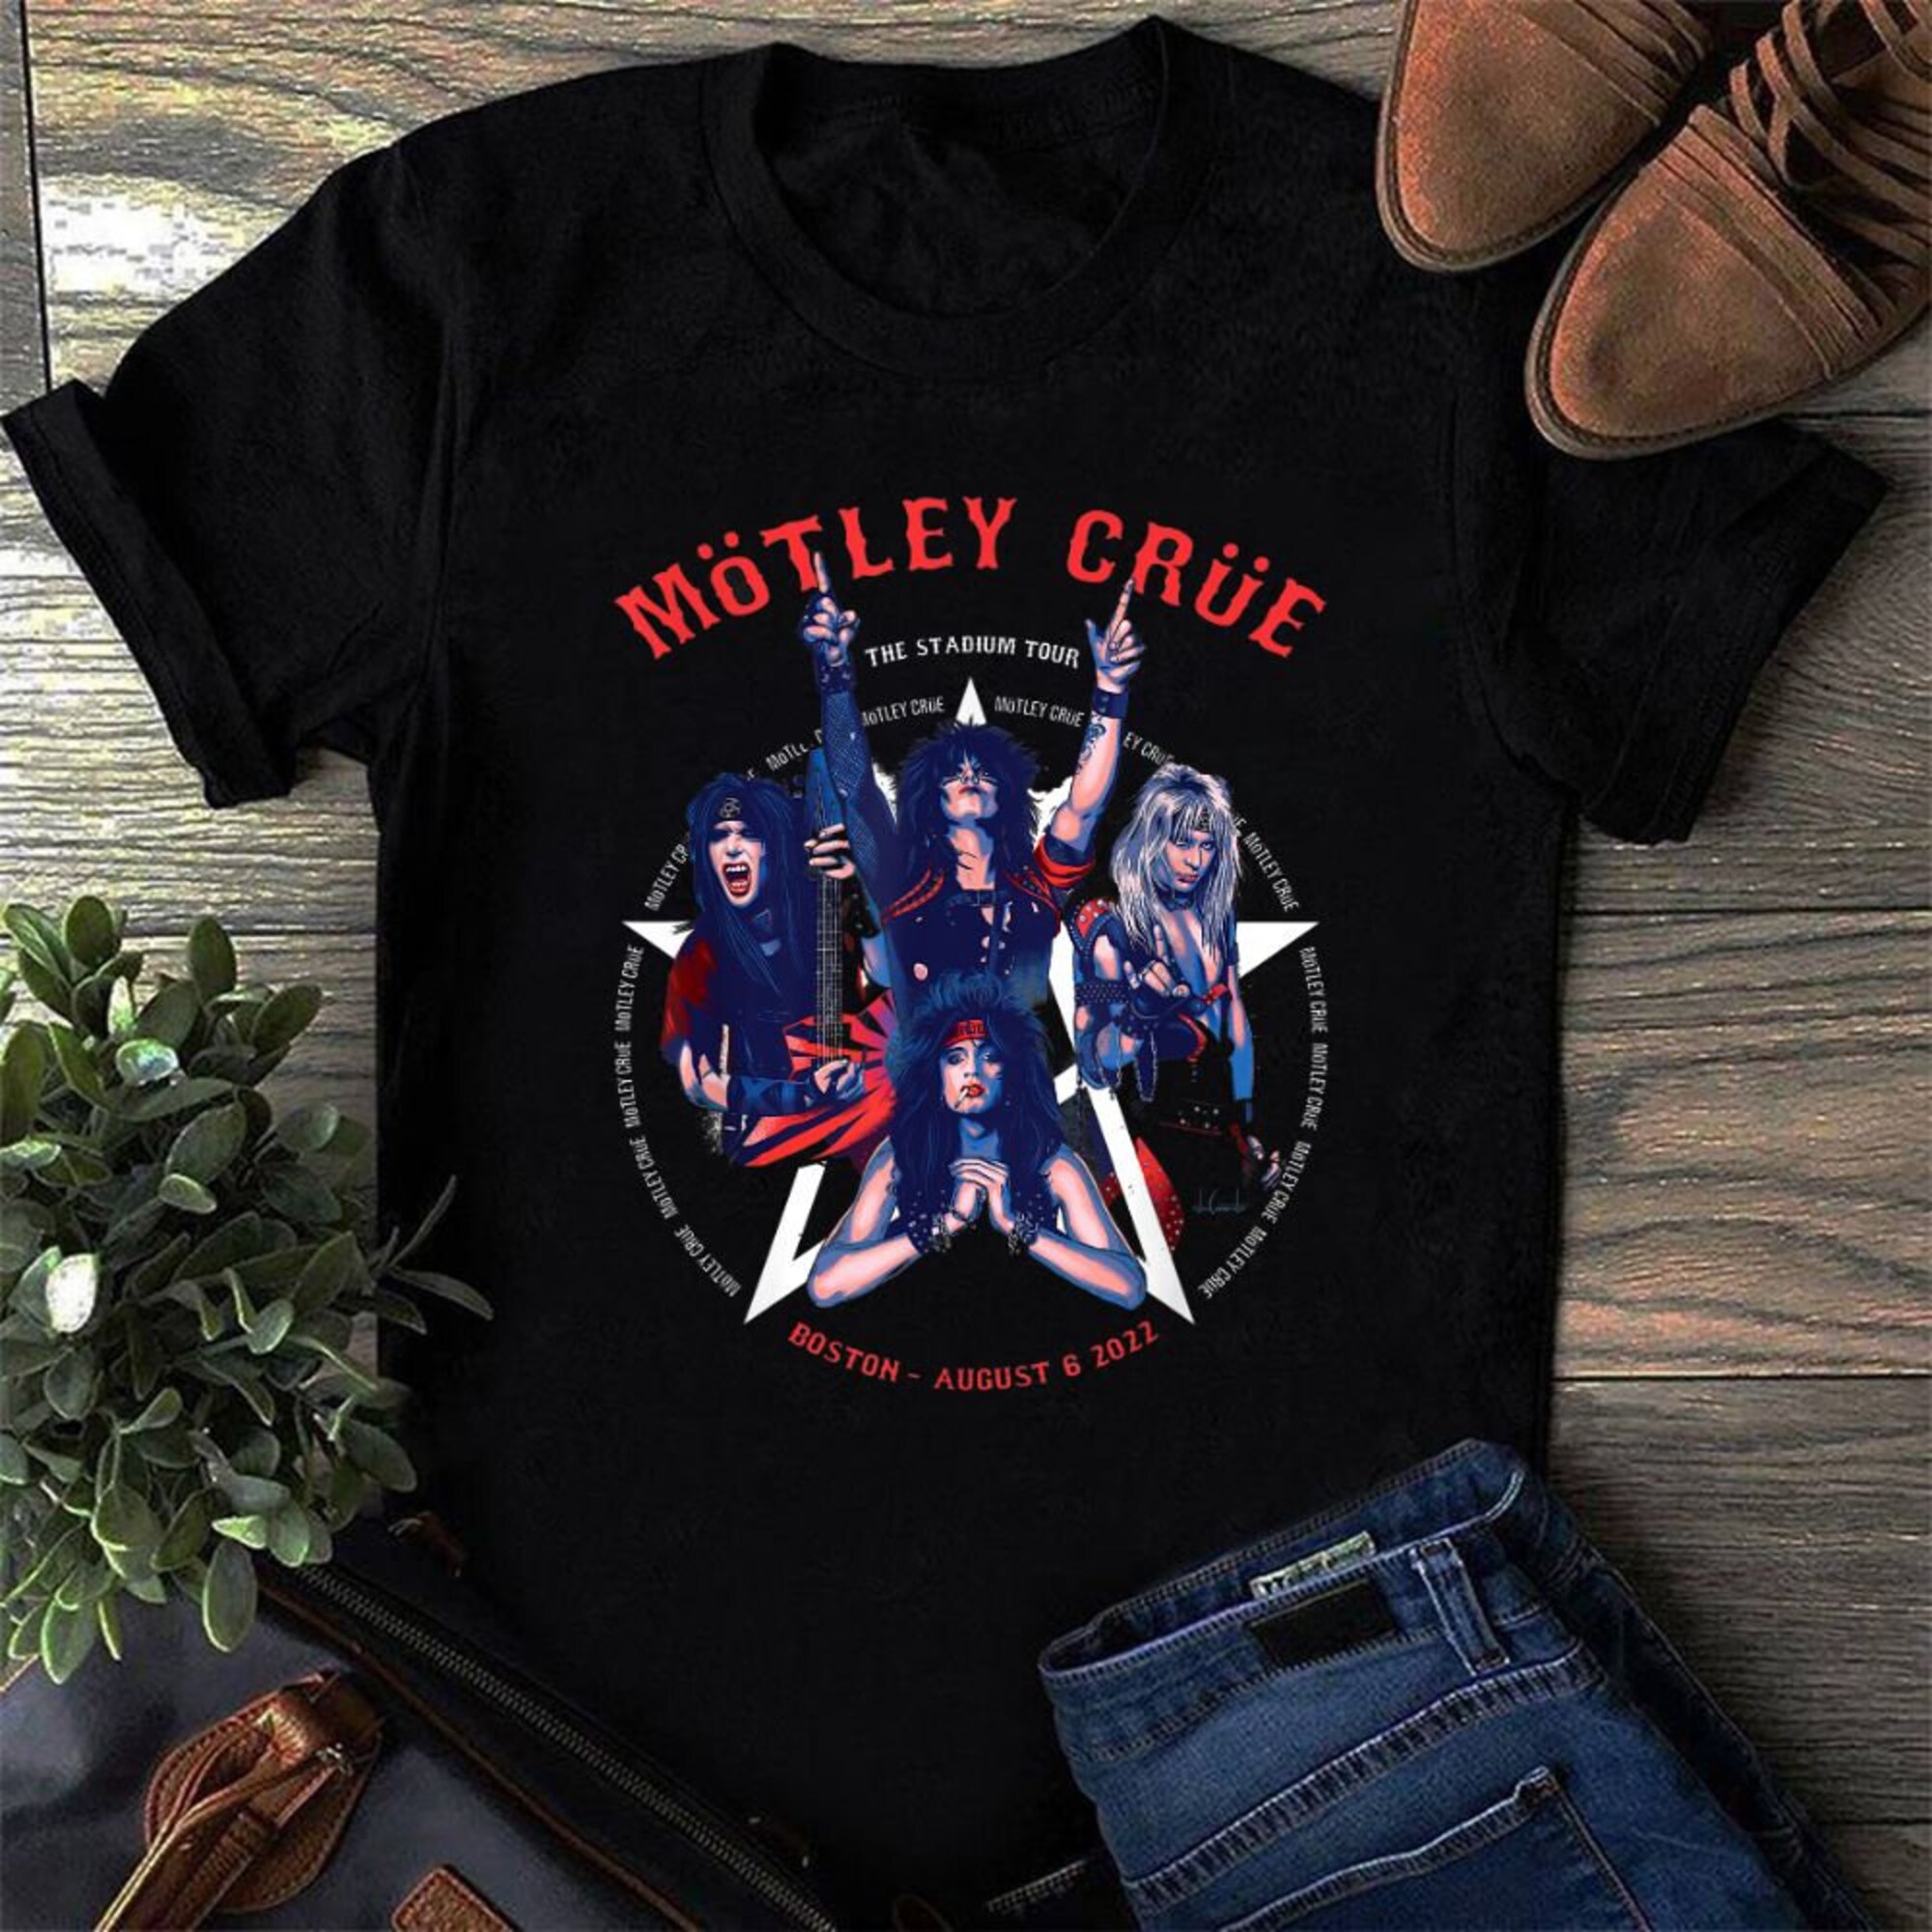 Discover Motley Crue - The Stadium Tour Boston Poster Event T-Shirt